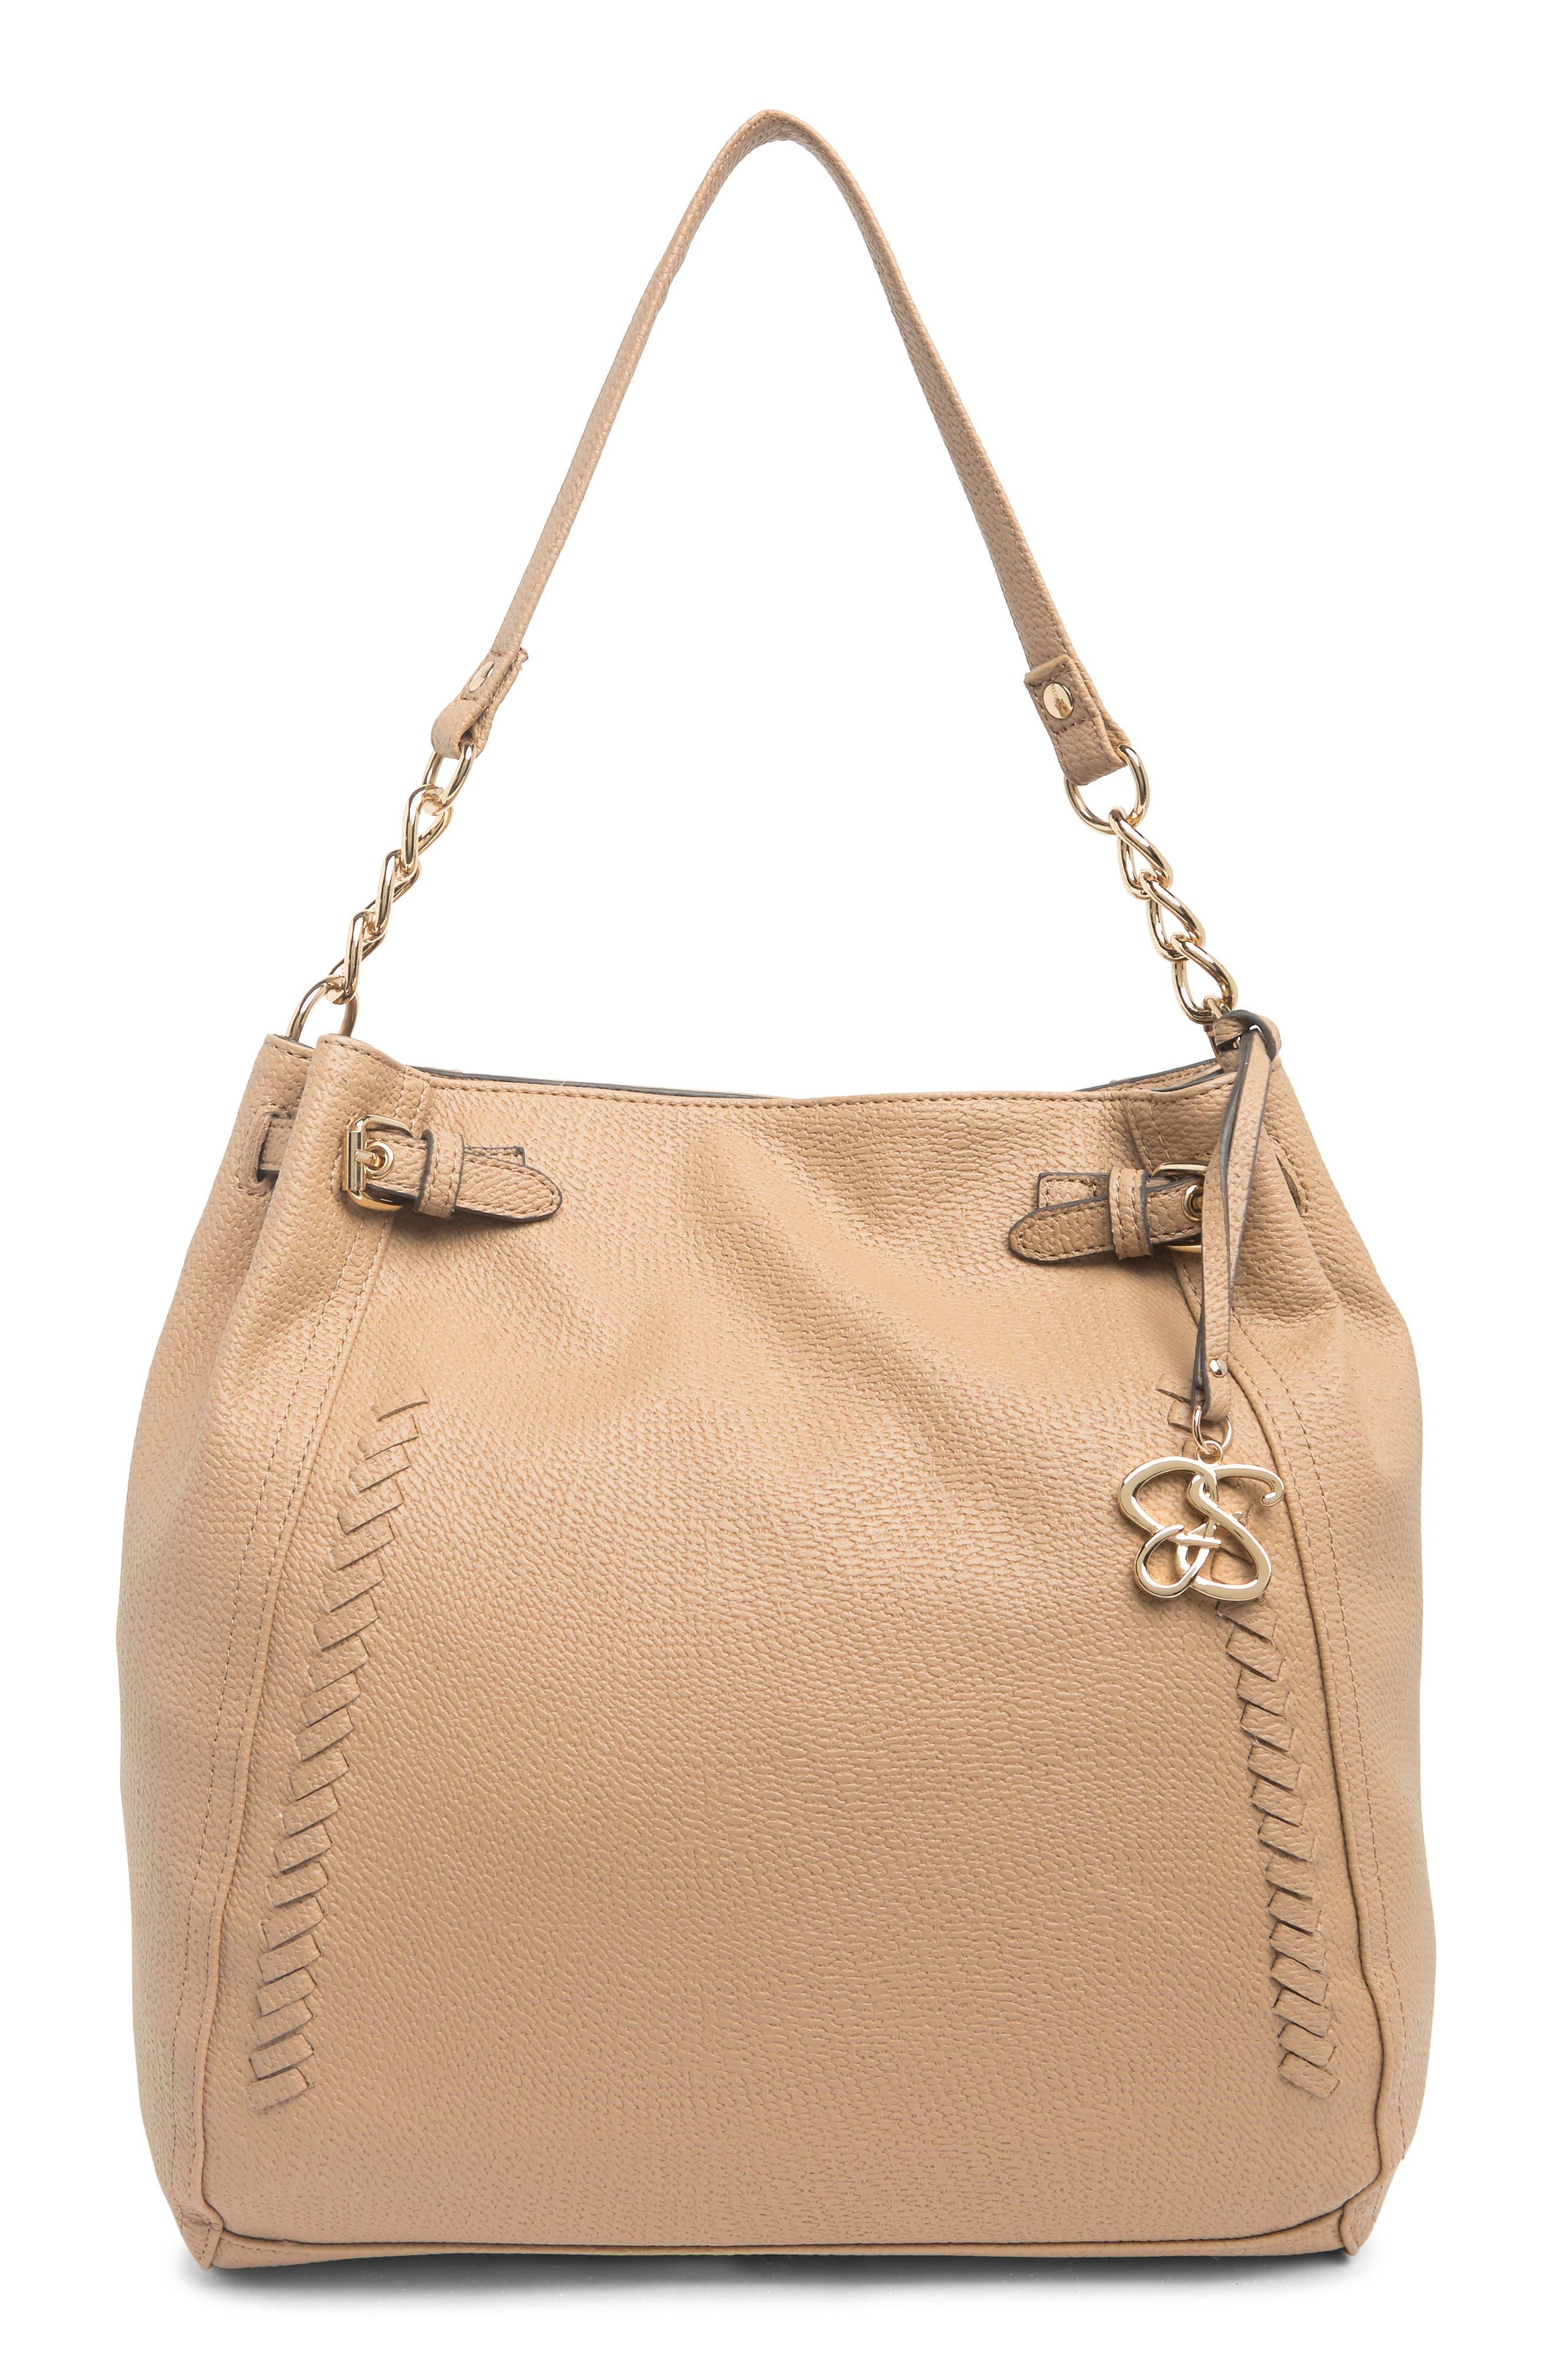 Nordstrom Rack: Jessica Simpson Handbags – only $22 (reg $108